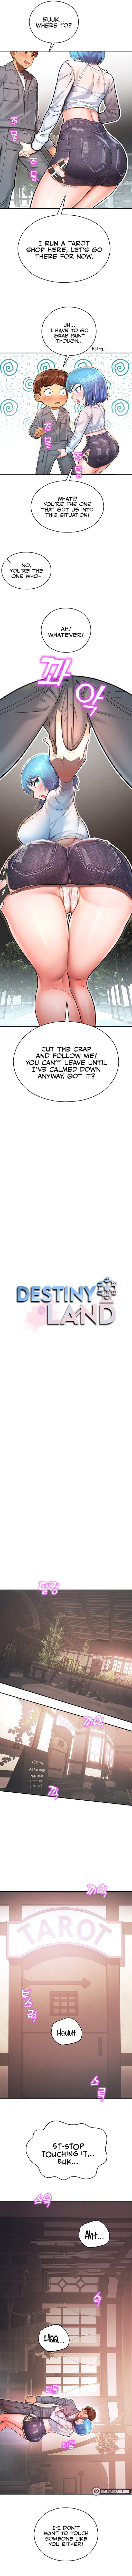 destiny-land-chap-2-8